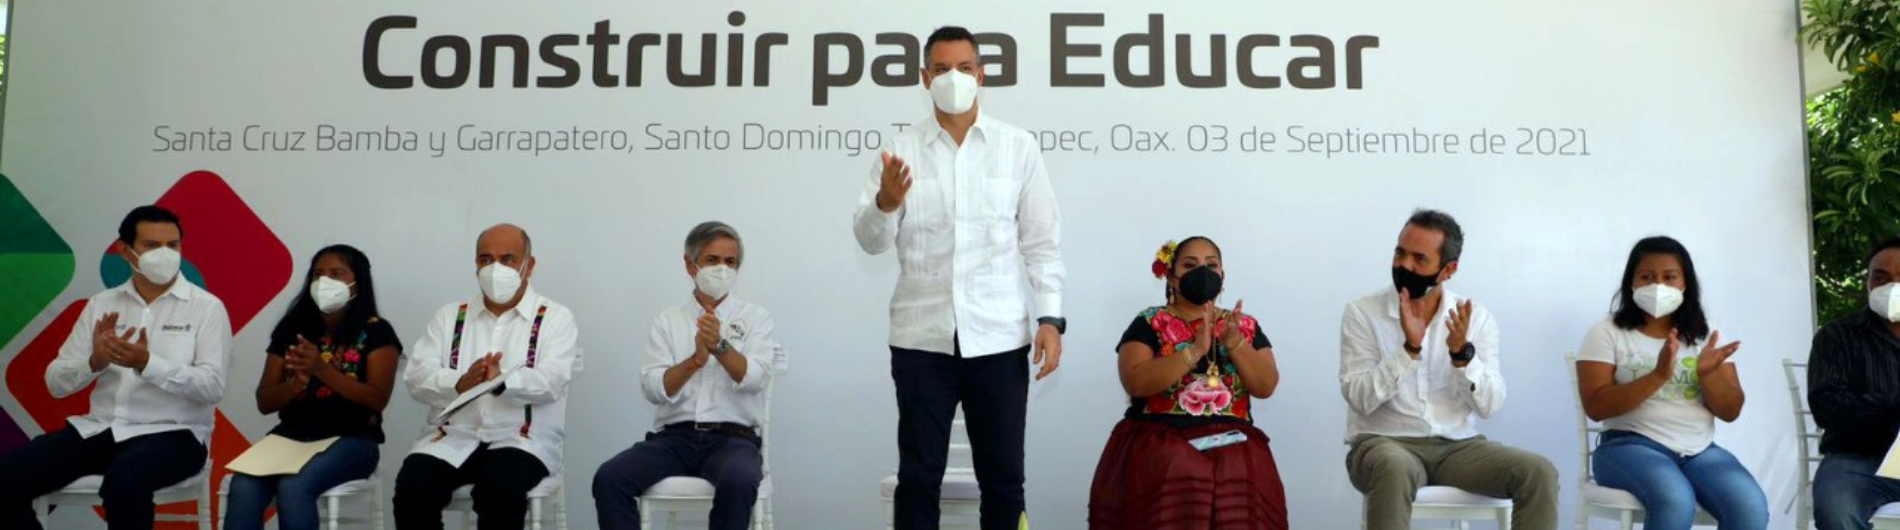 Iberdrola, Oaxaca, Construir para Educar